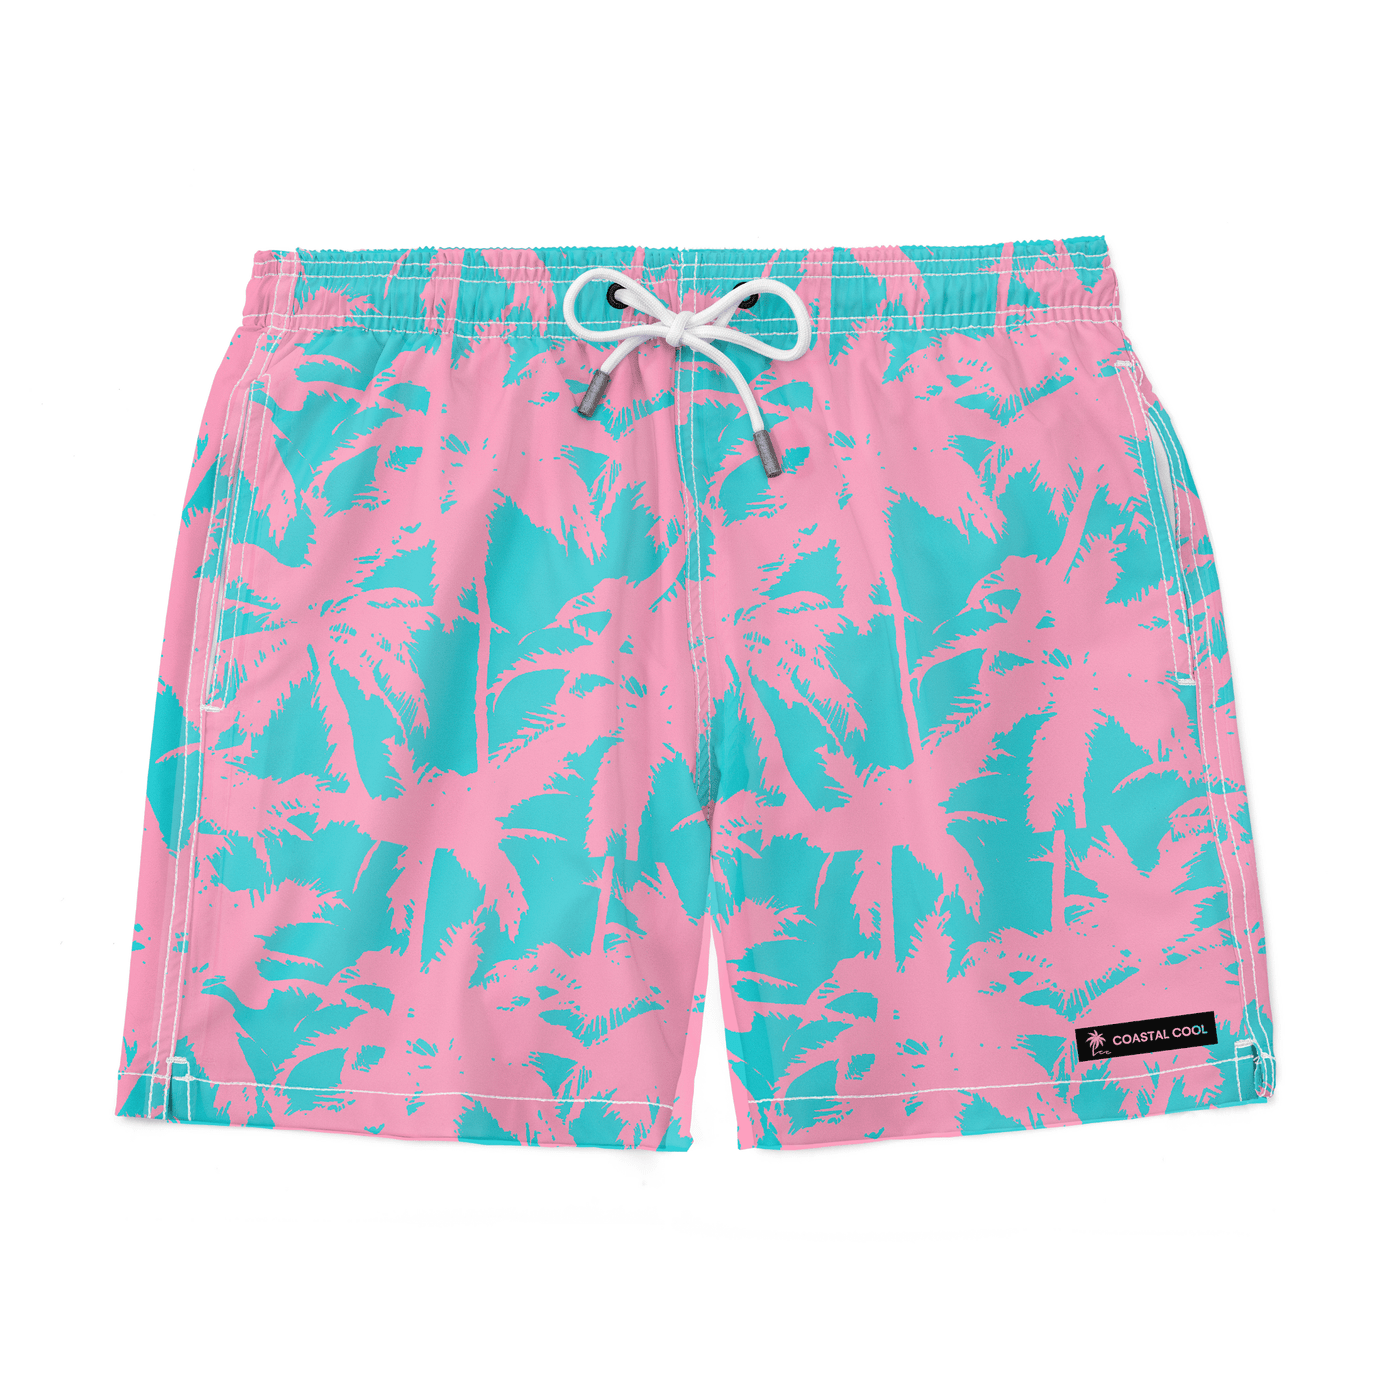 Friday Palms Swim Trunks - Coastal Cool - Swimwear and Beachwear - Recycled fabrics